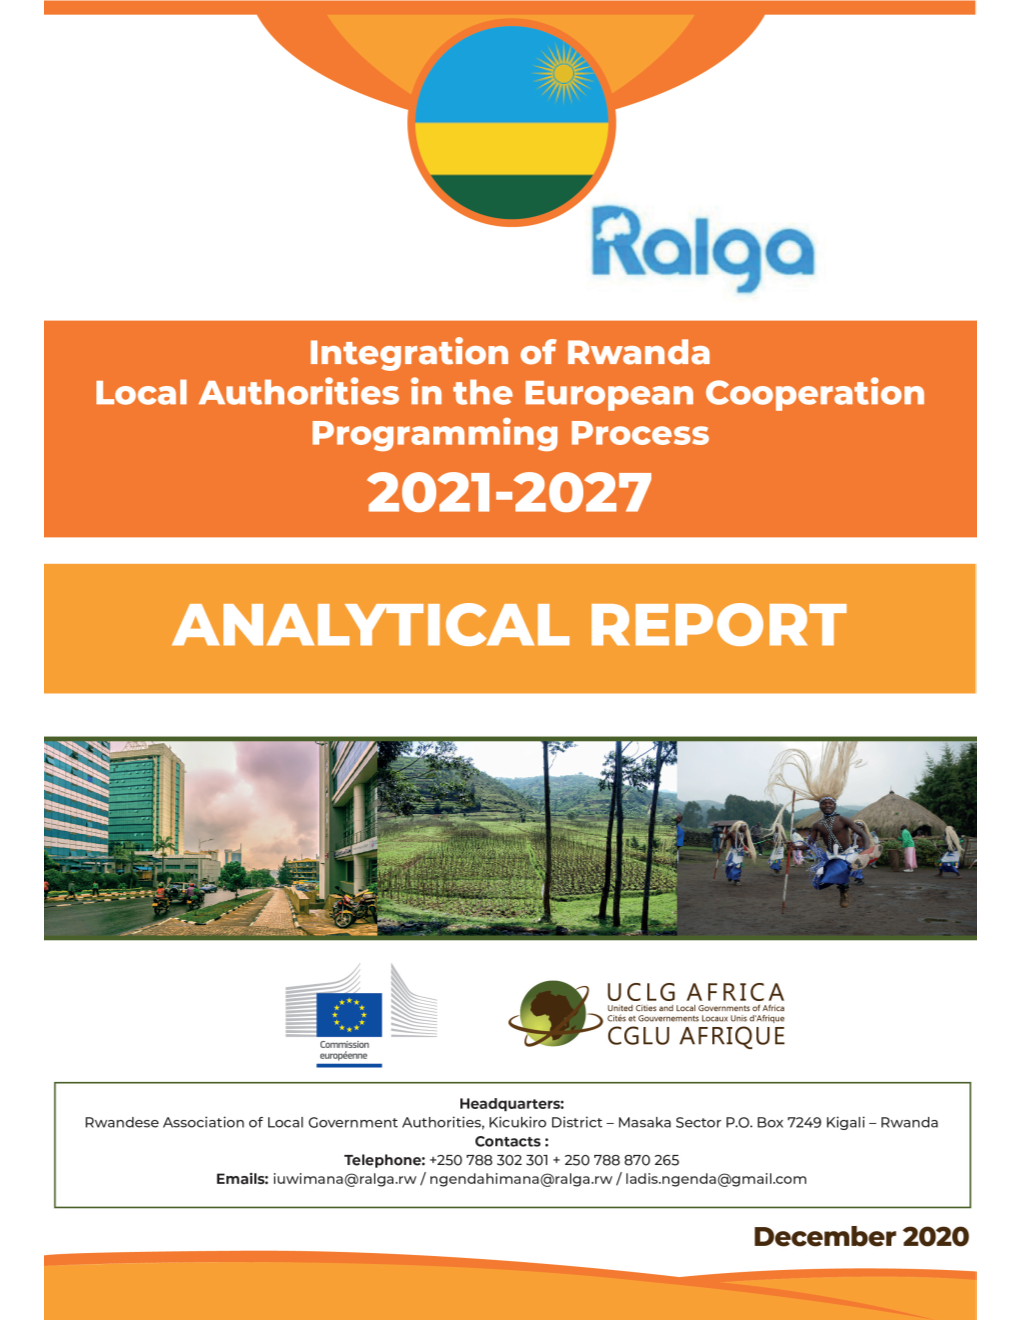 Ralga Analytical Report 2020.Pdf